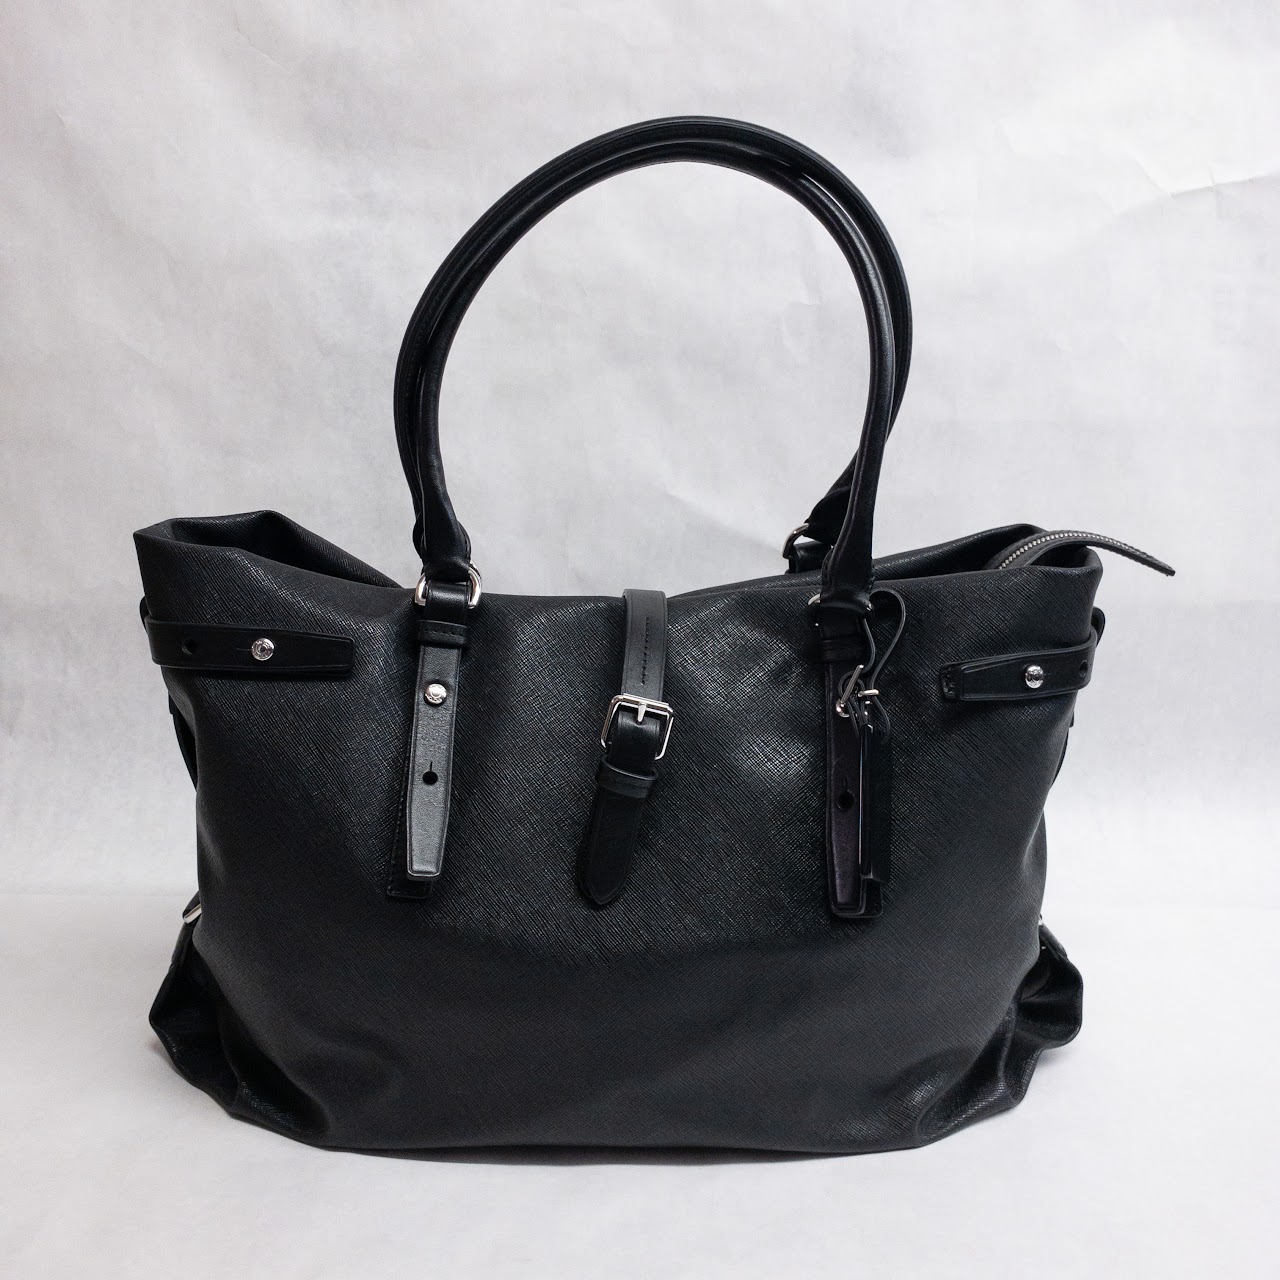 Tumi Large Saffiano Black Leather Tote Satchel Bag Zipper Top